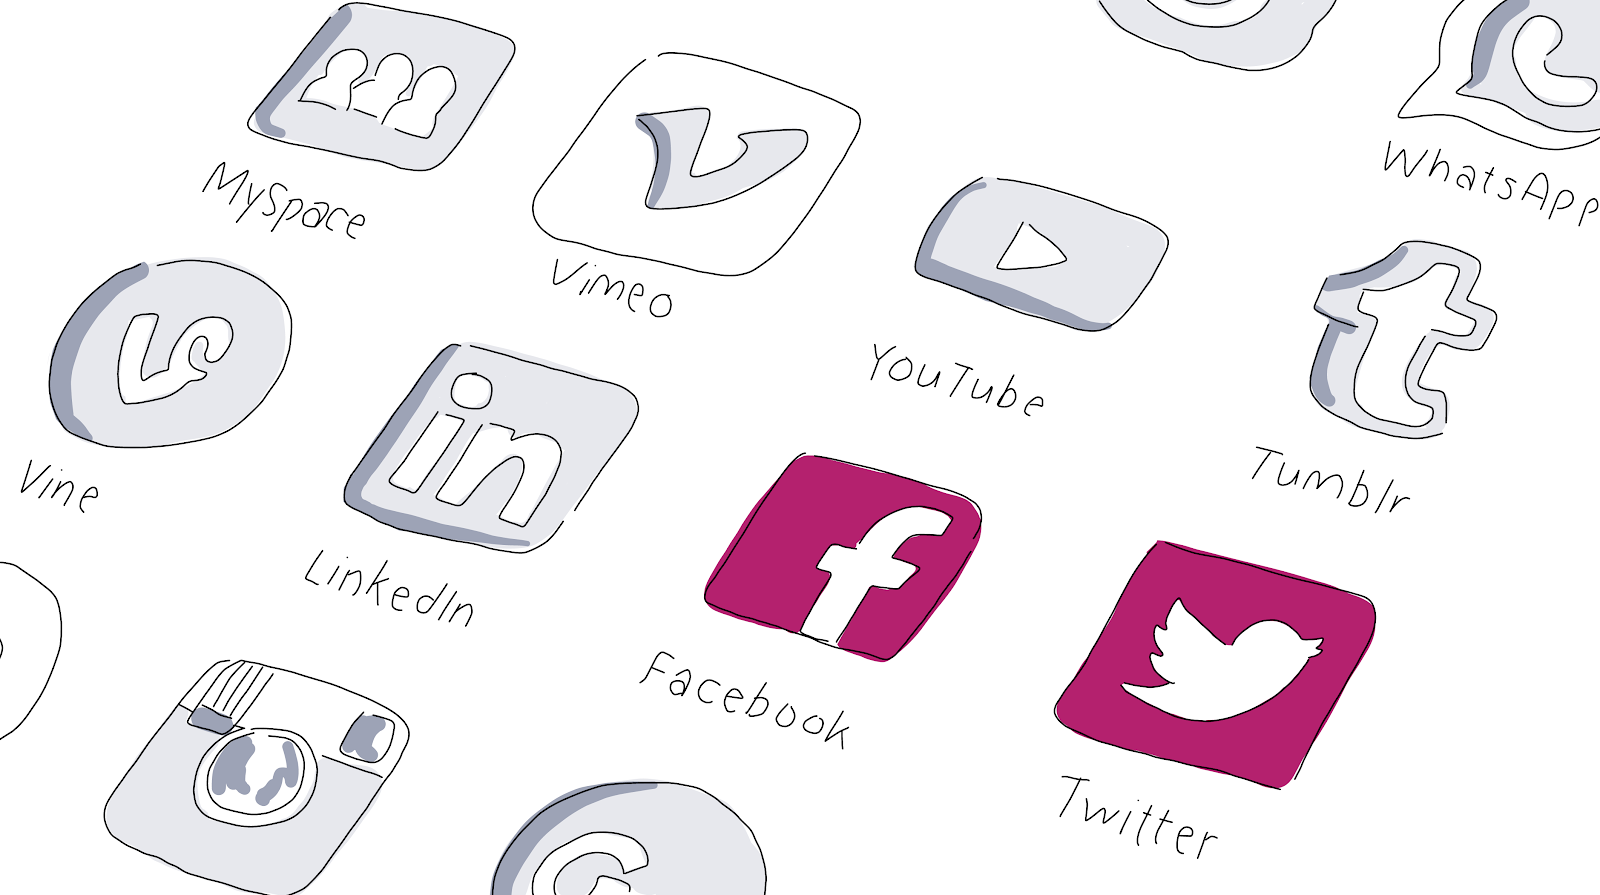 illustration of apps: myspace, youtube, facebook, twitter, etc.